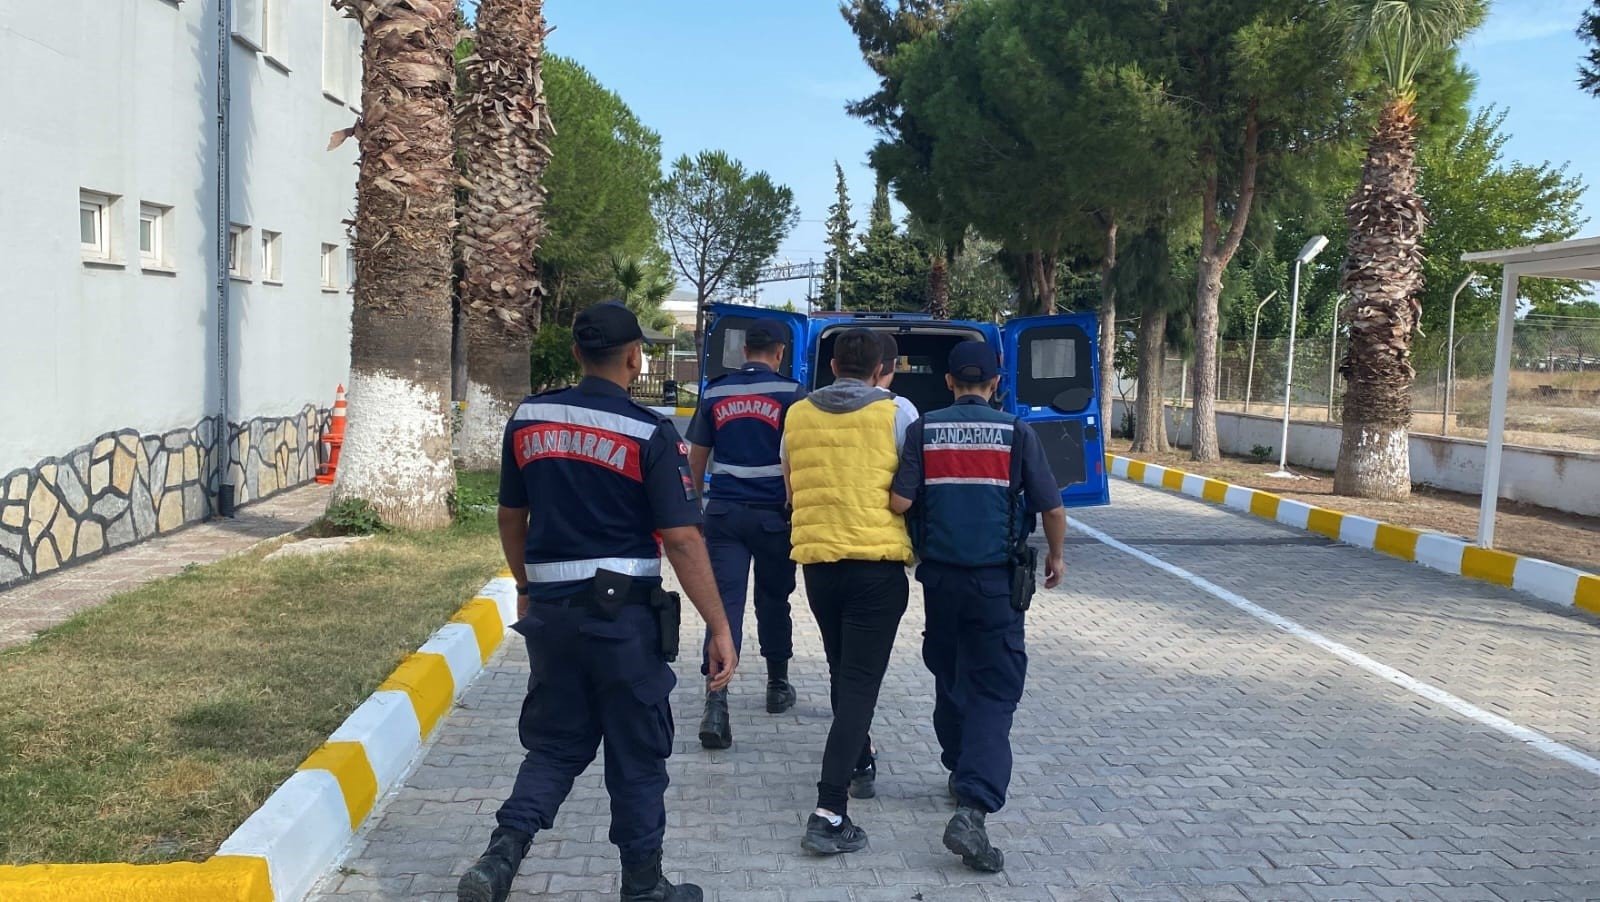 Gendarmerie troops escort a suspect captured in an operation against migrant smugglers, in Izmir, western Türkiye, Oct.9, 2023. (IHA Photo)